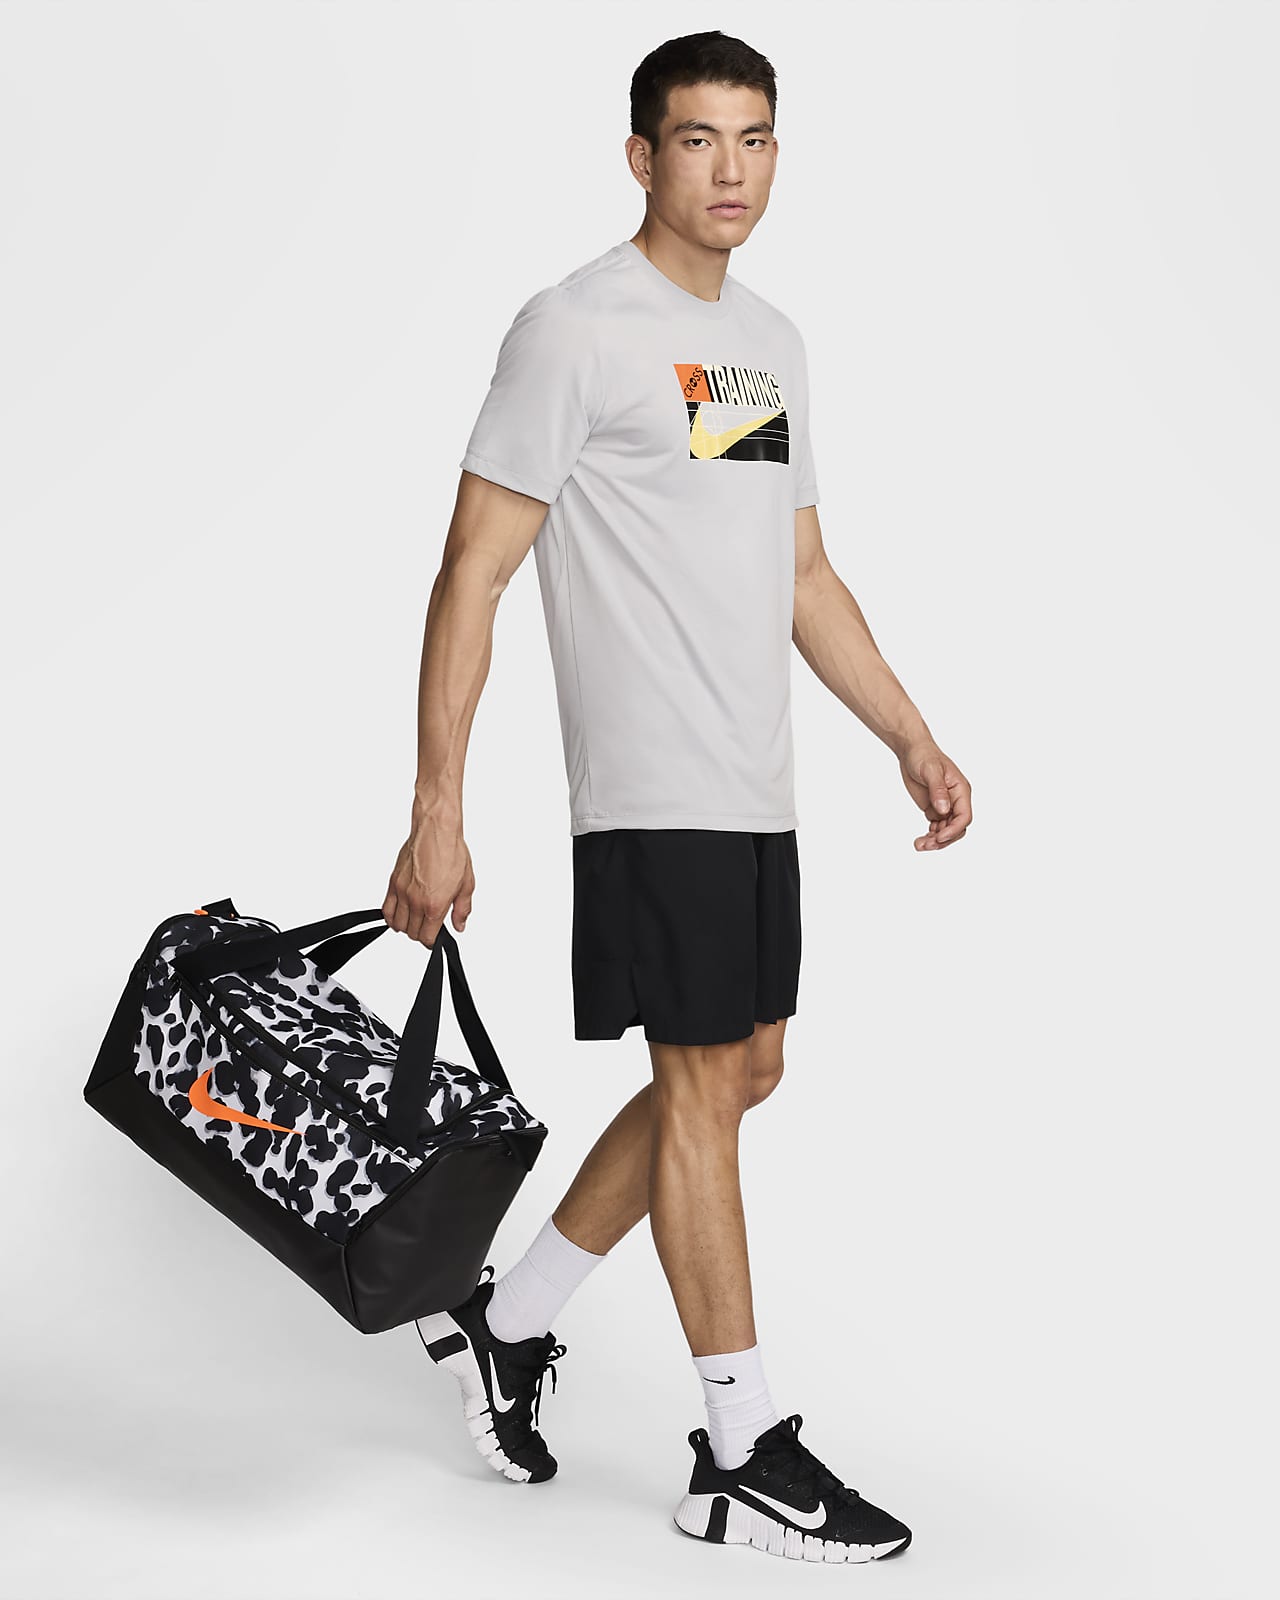 Buy Nike Brasilia Training Duffel Bag (Extra Small, 25L) 2024 Online